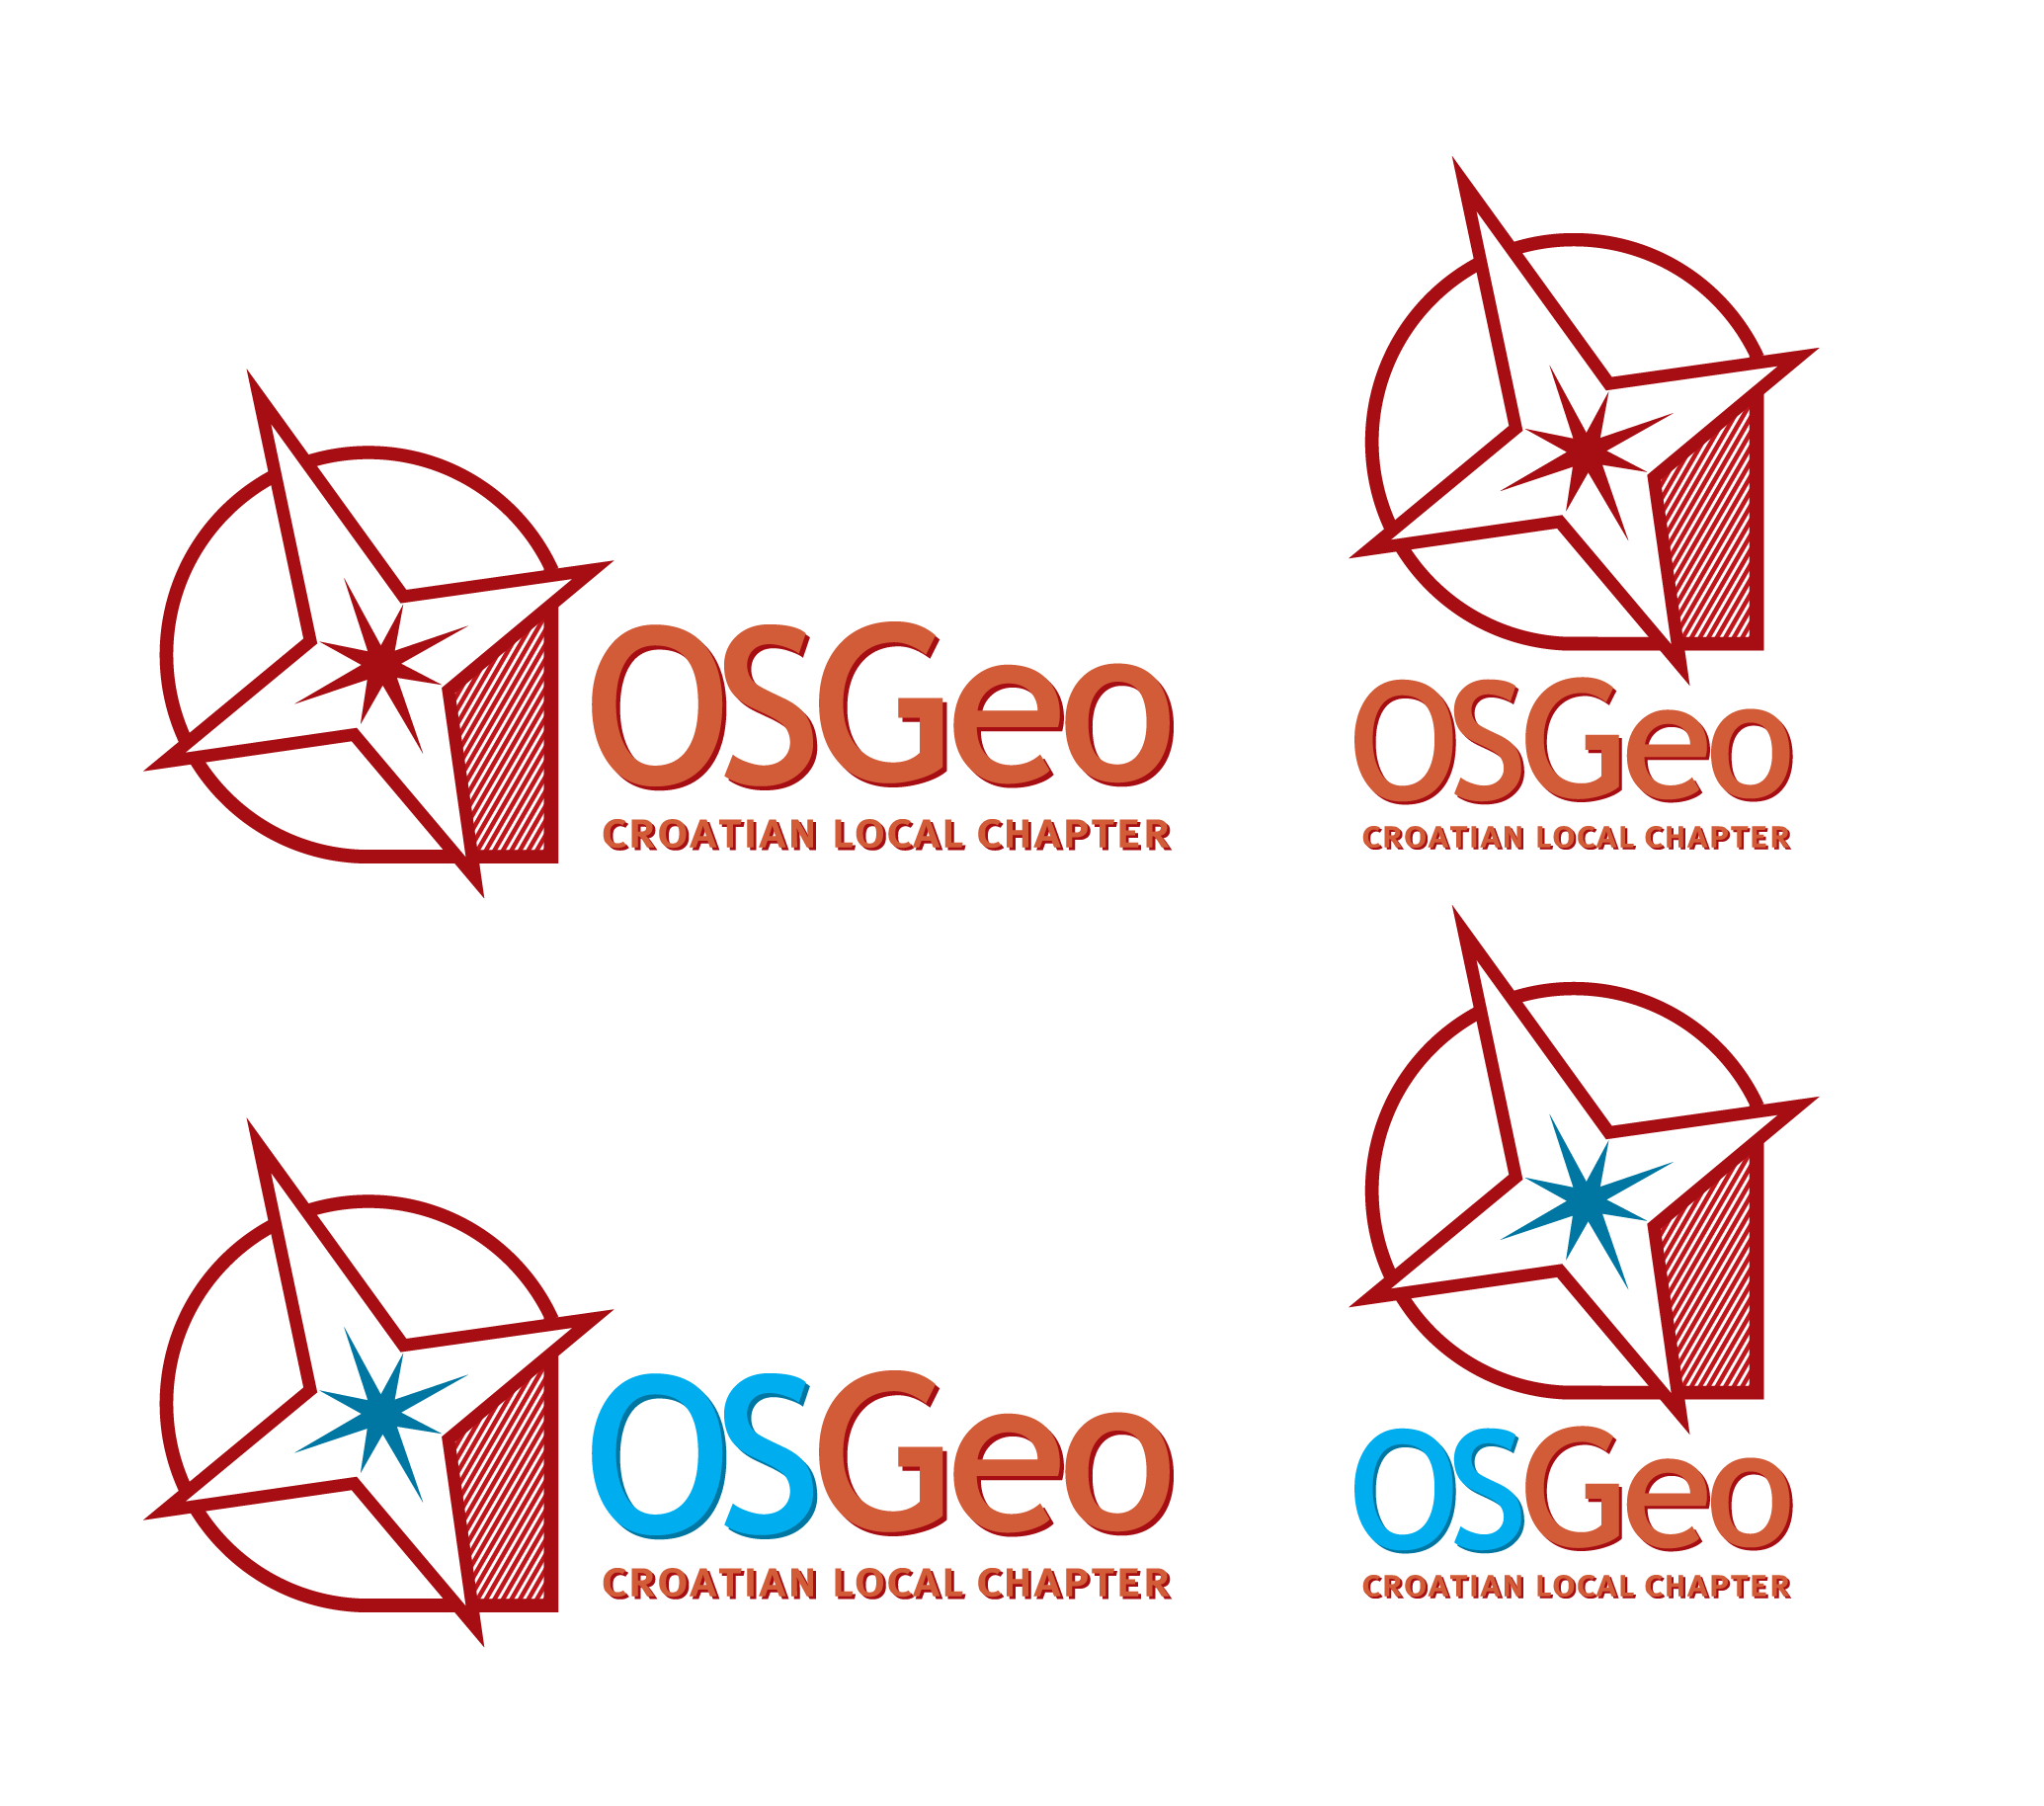 Hr osgeo logo v0 2-02.png